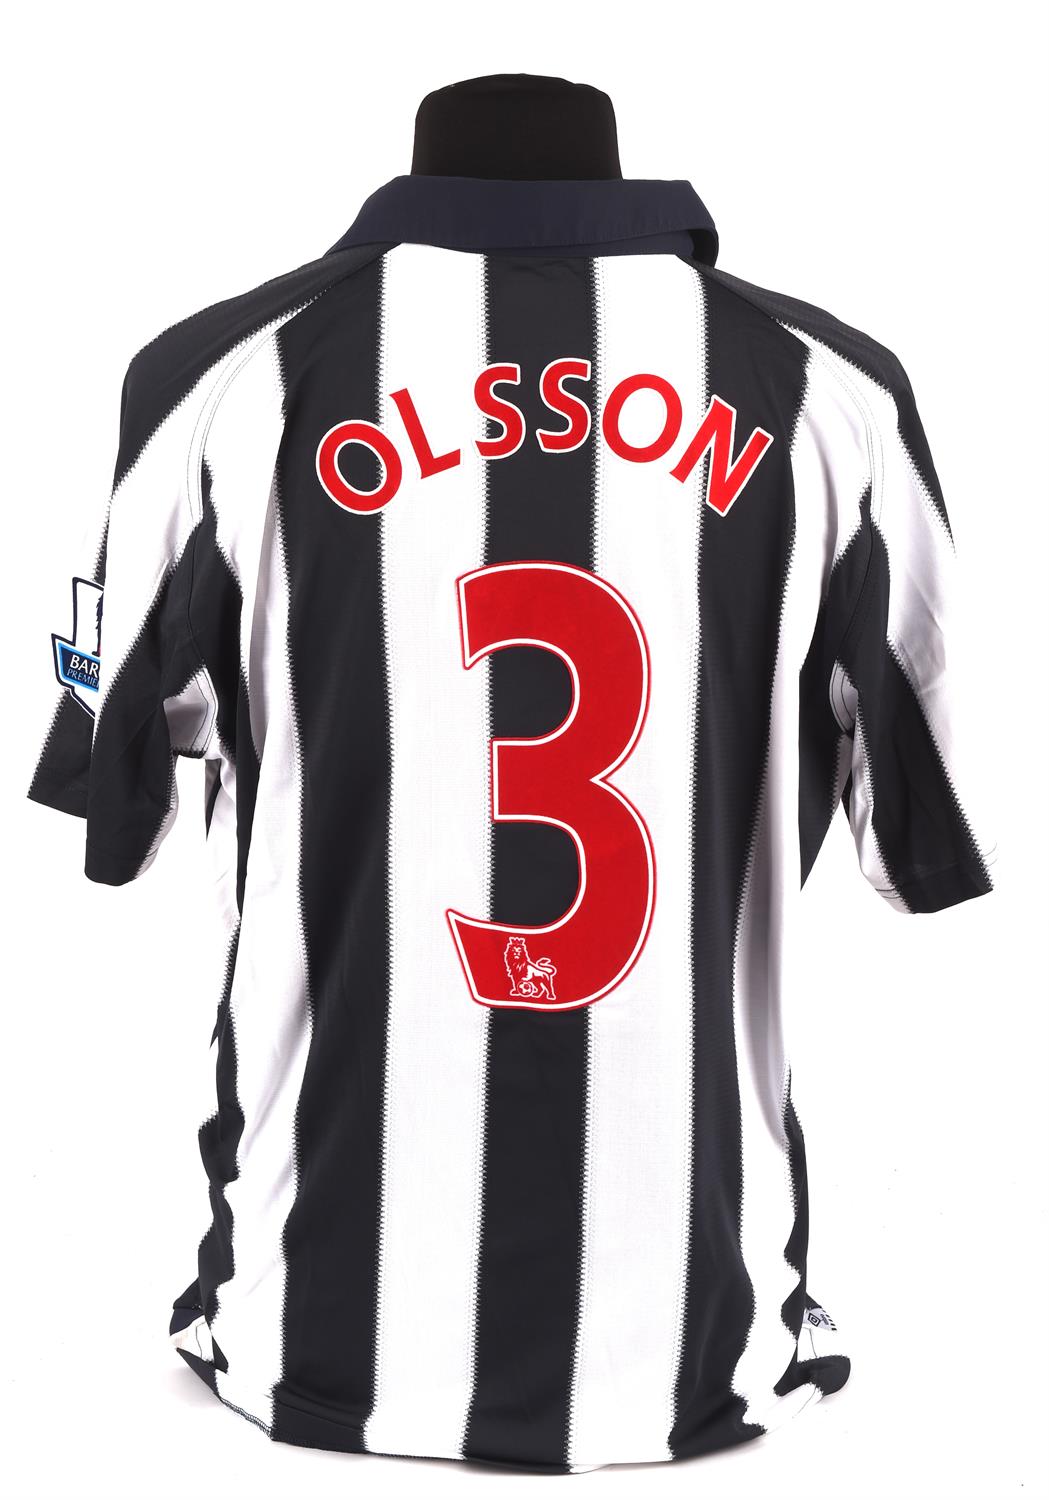 West Bromwich Albion Football club, Olsson (No.3) Season shirt from 2010-2011, Match Worn 11 Sep